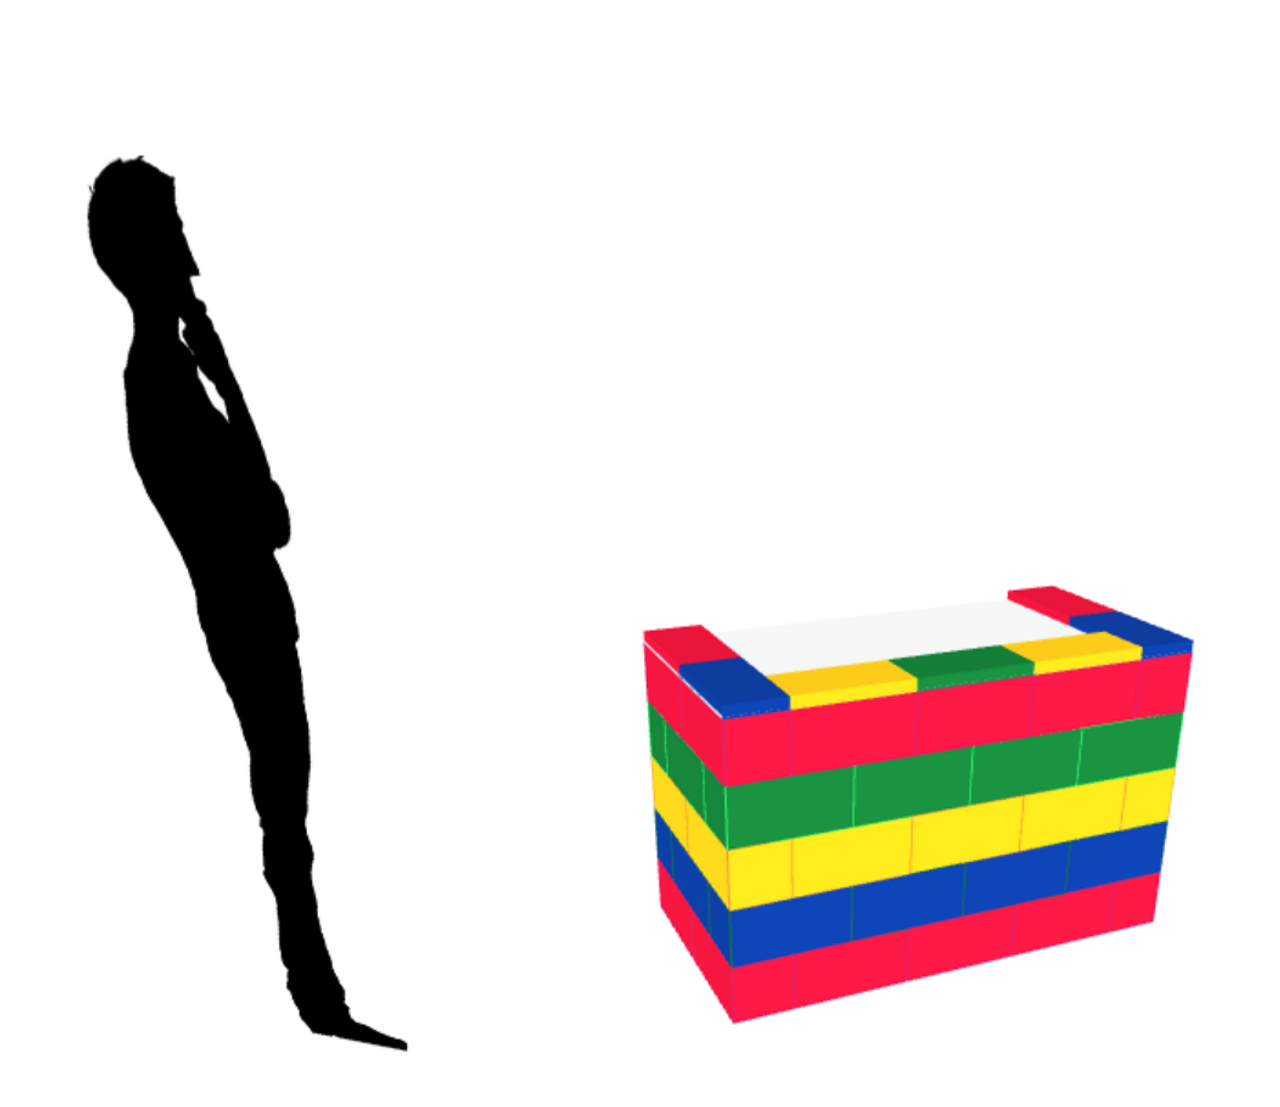 Build your desk kit out of modular building blocks!